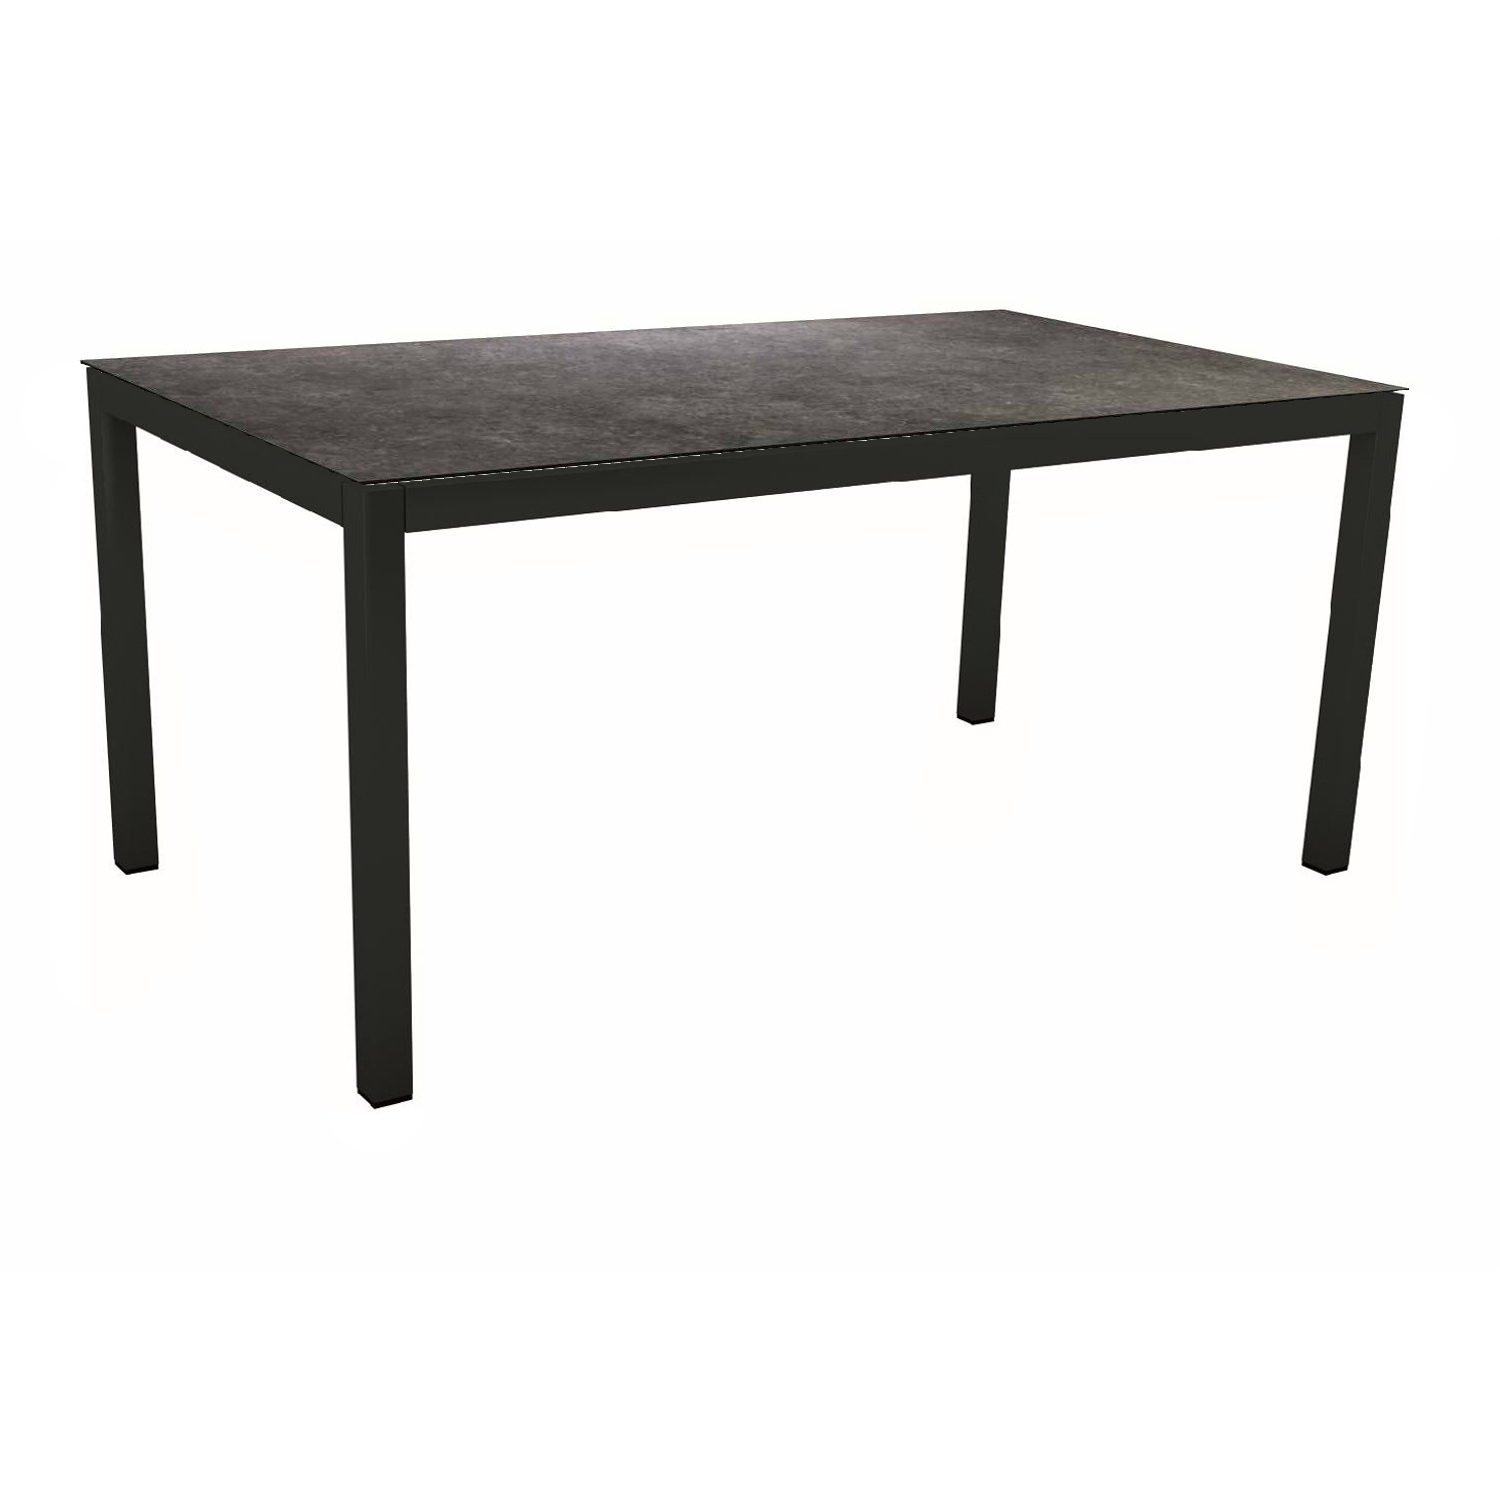 Stern Gartentisch, Gestell Aluminium schwarz matt, Tischplatte HPL Vintage Grau, 130x80 cm